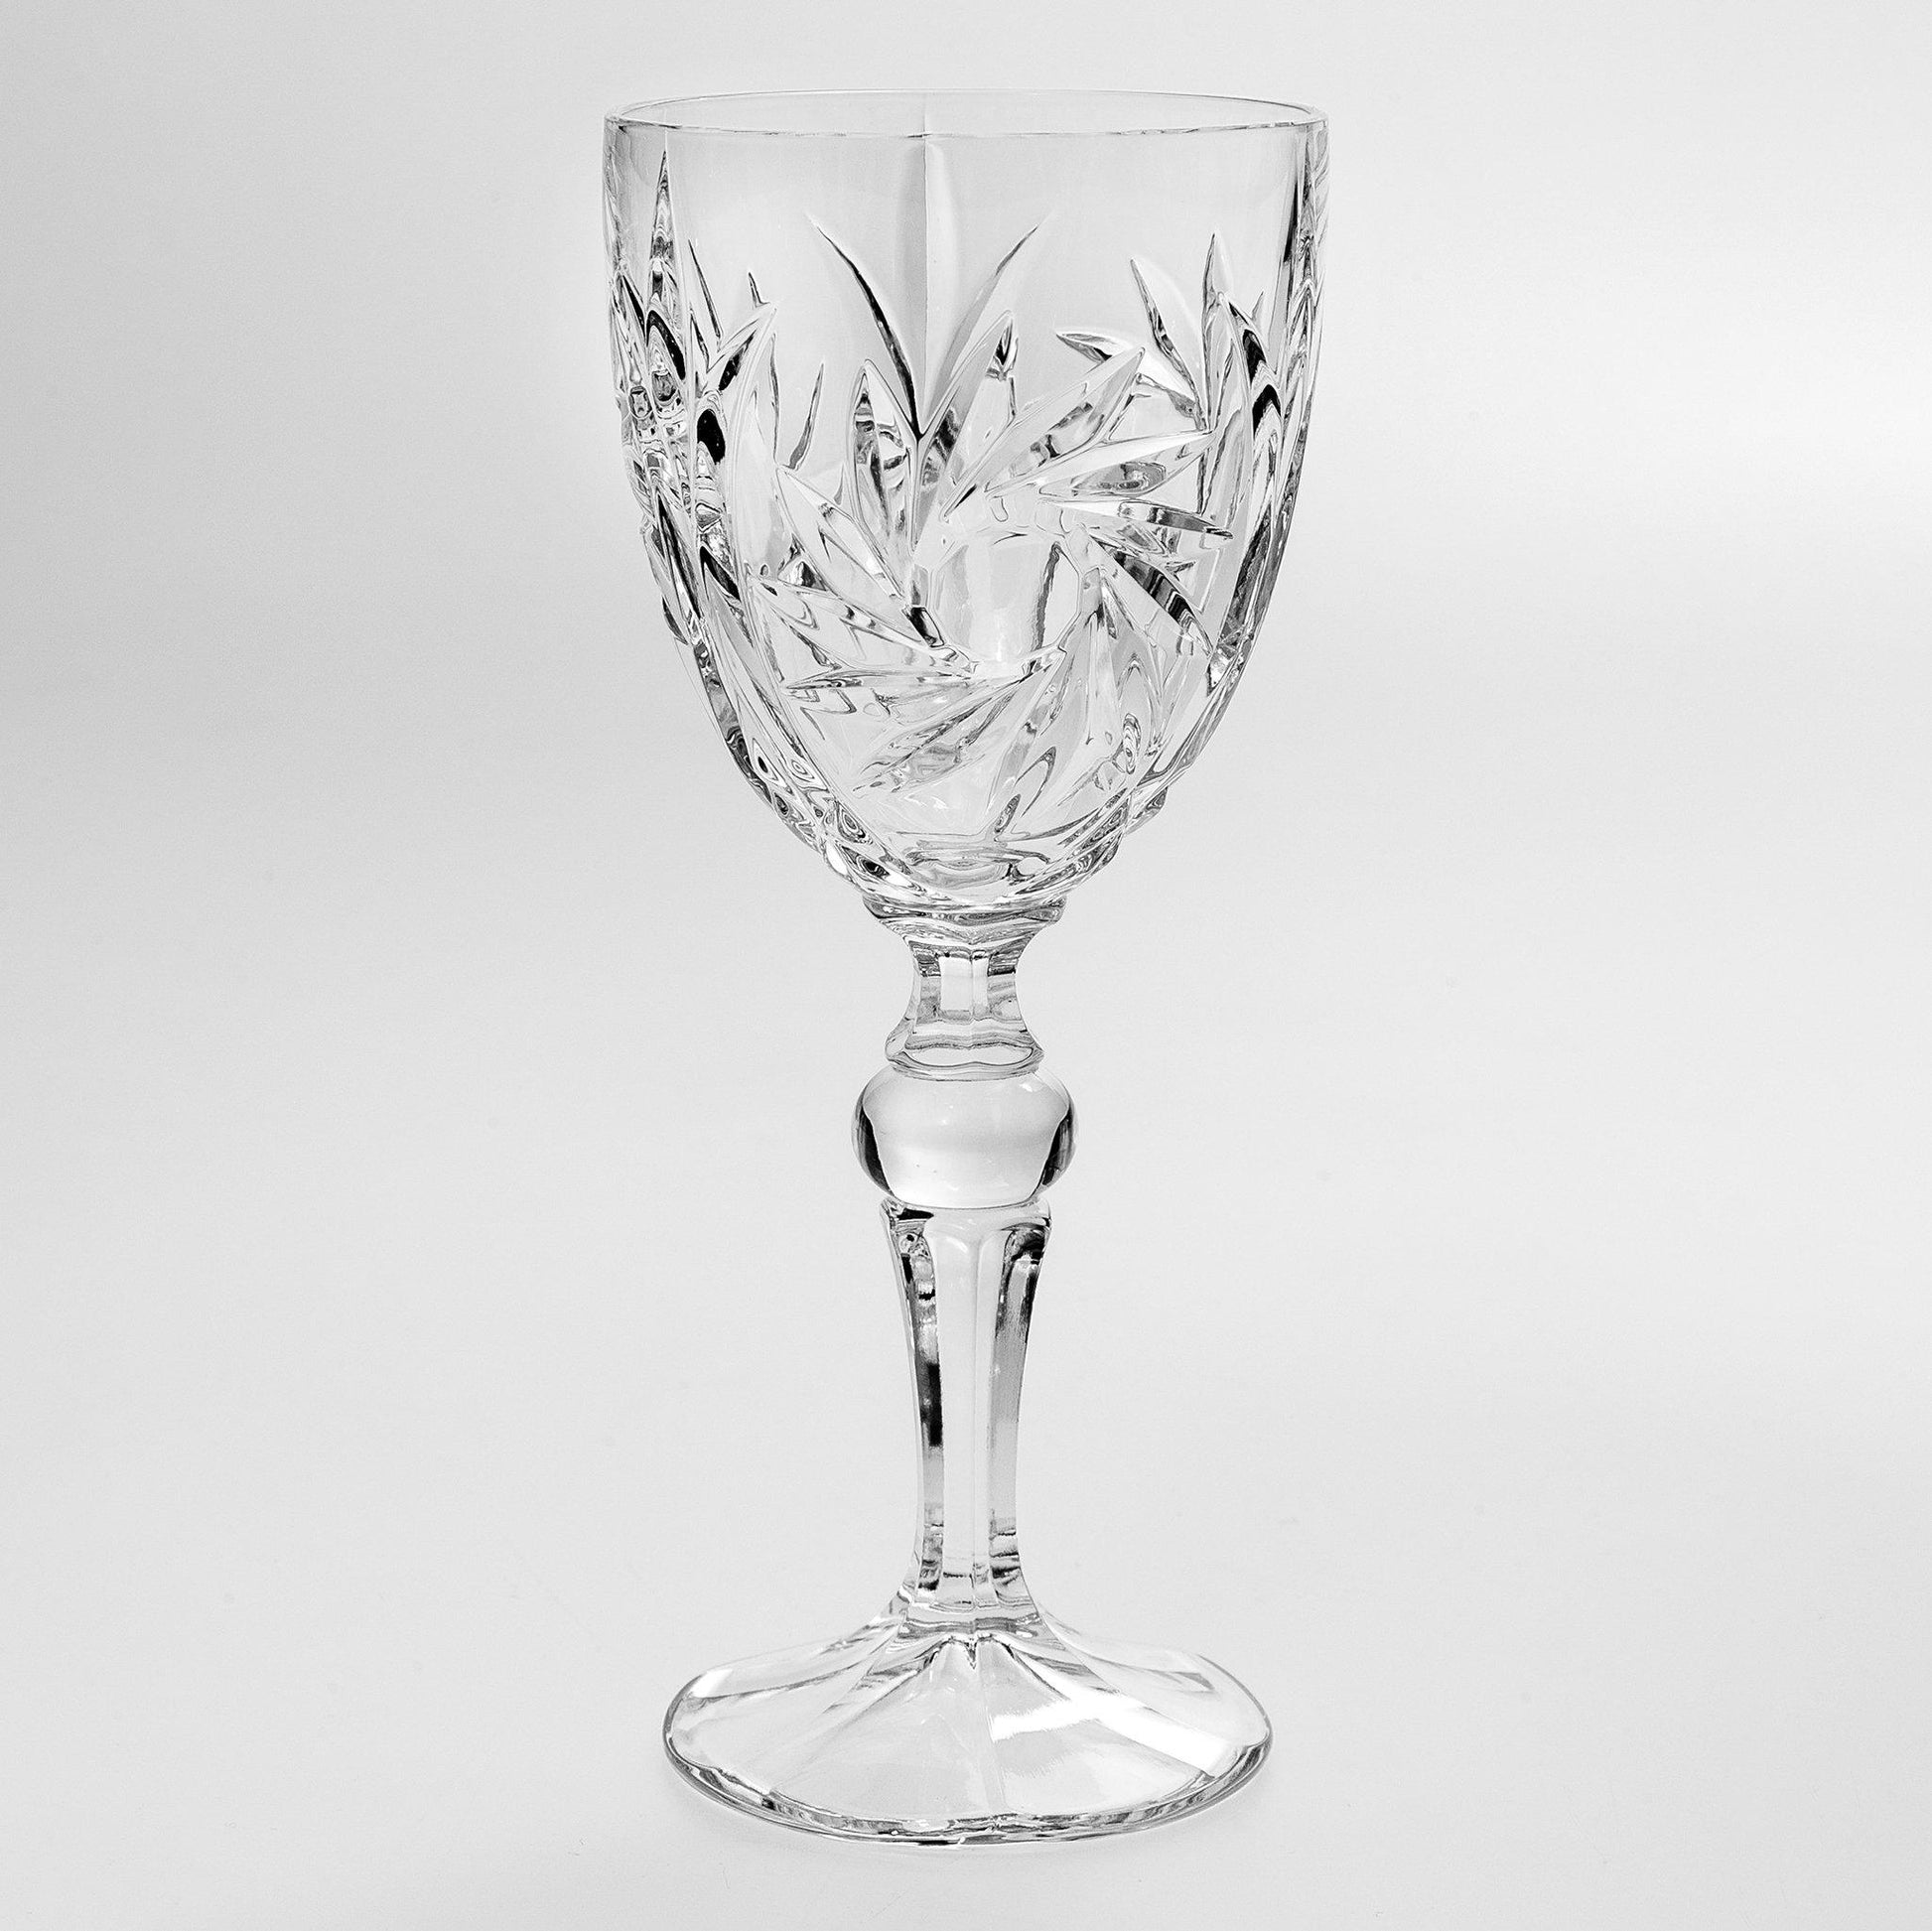 Crystal wine glass with pinwheel design